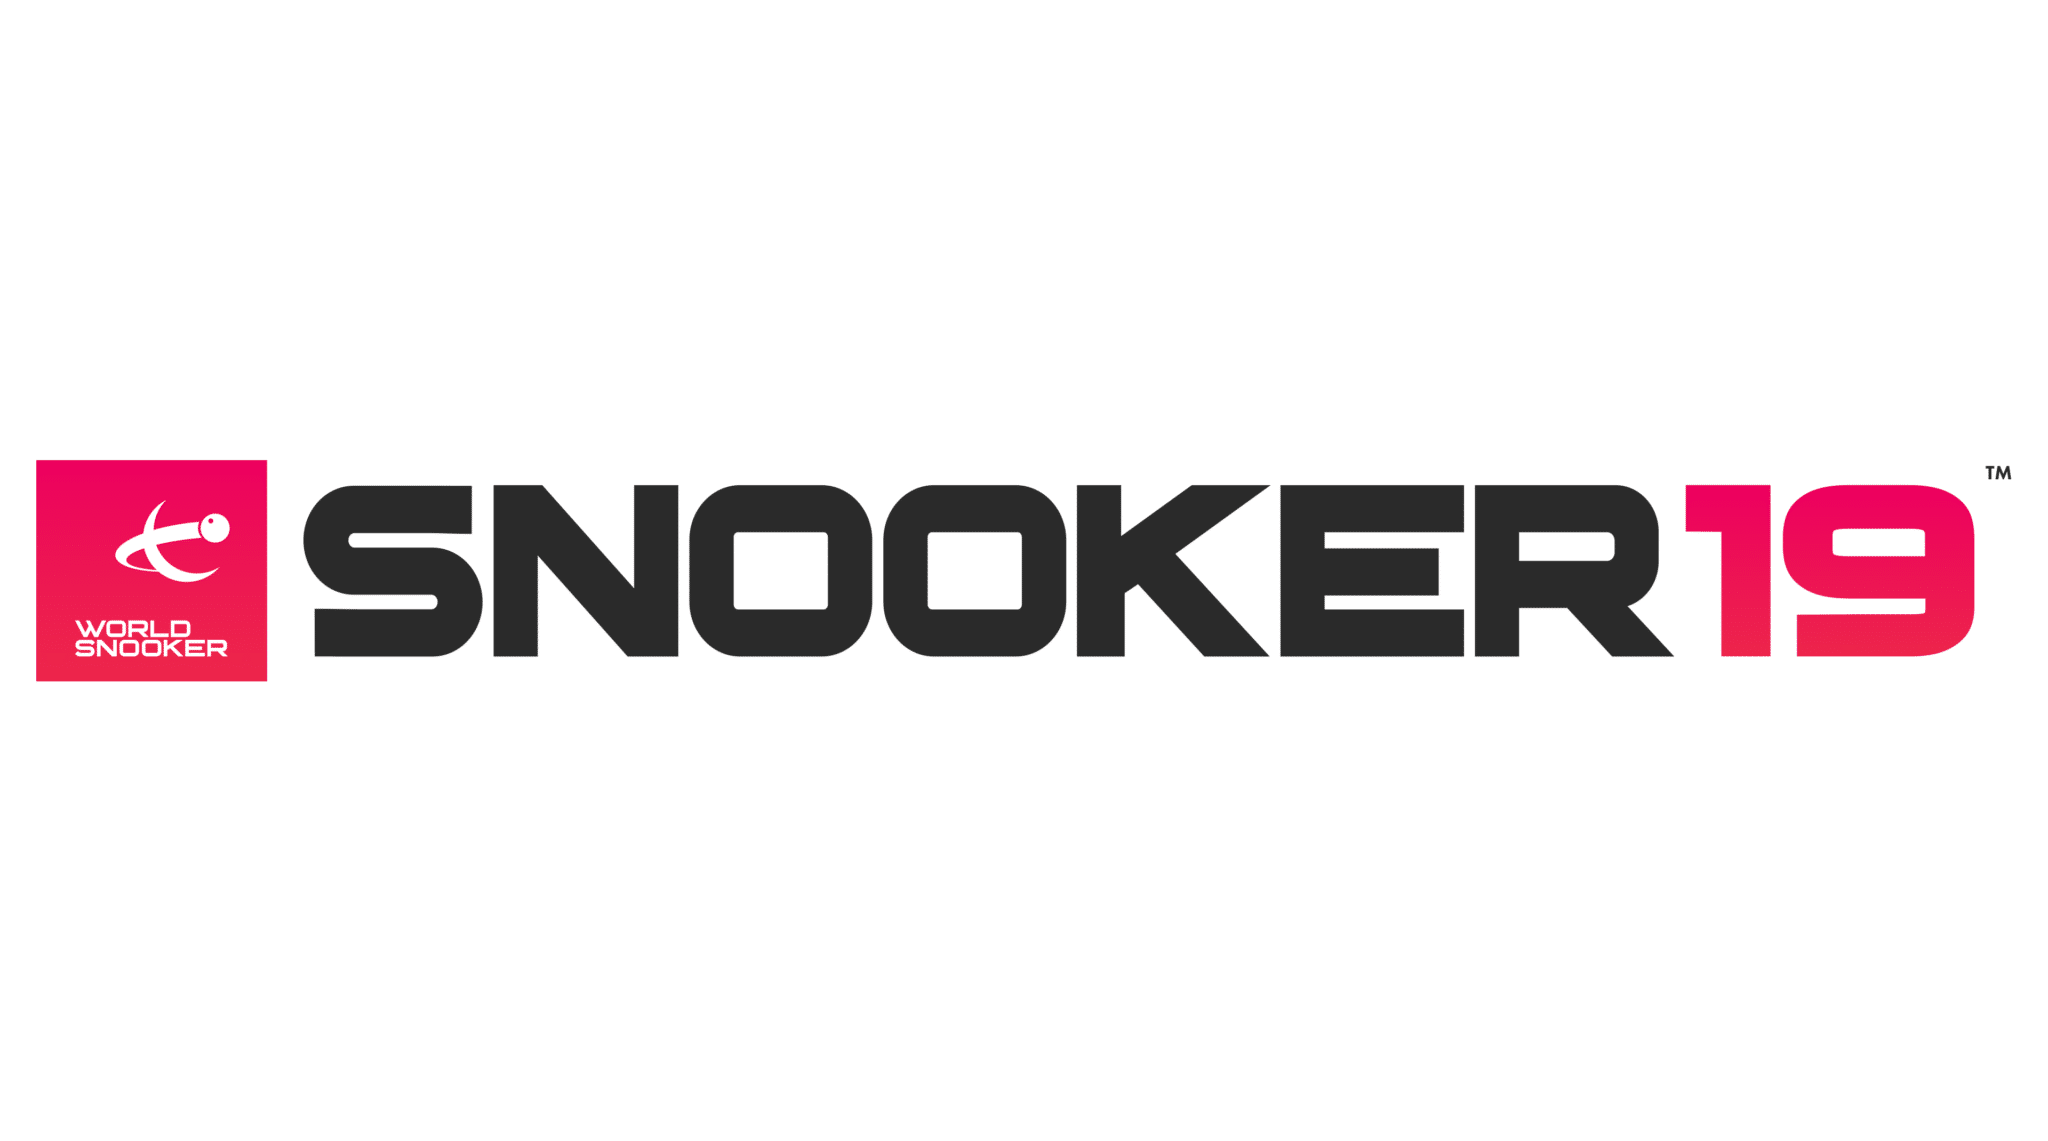 Snooker 2019